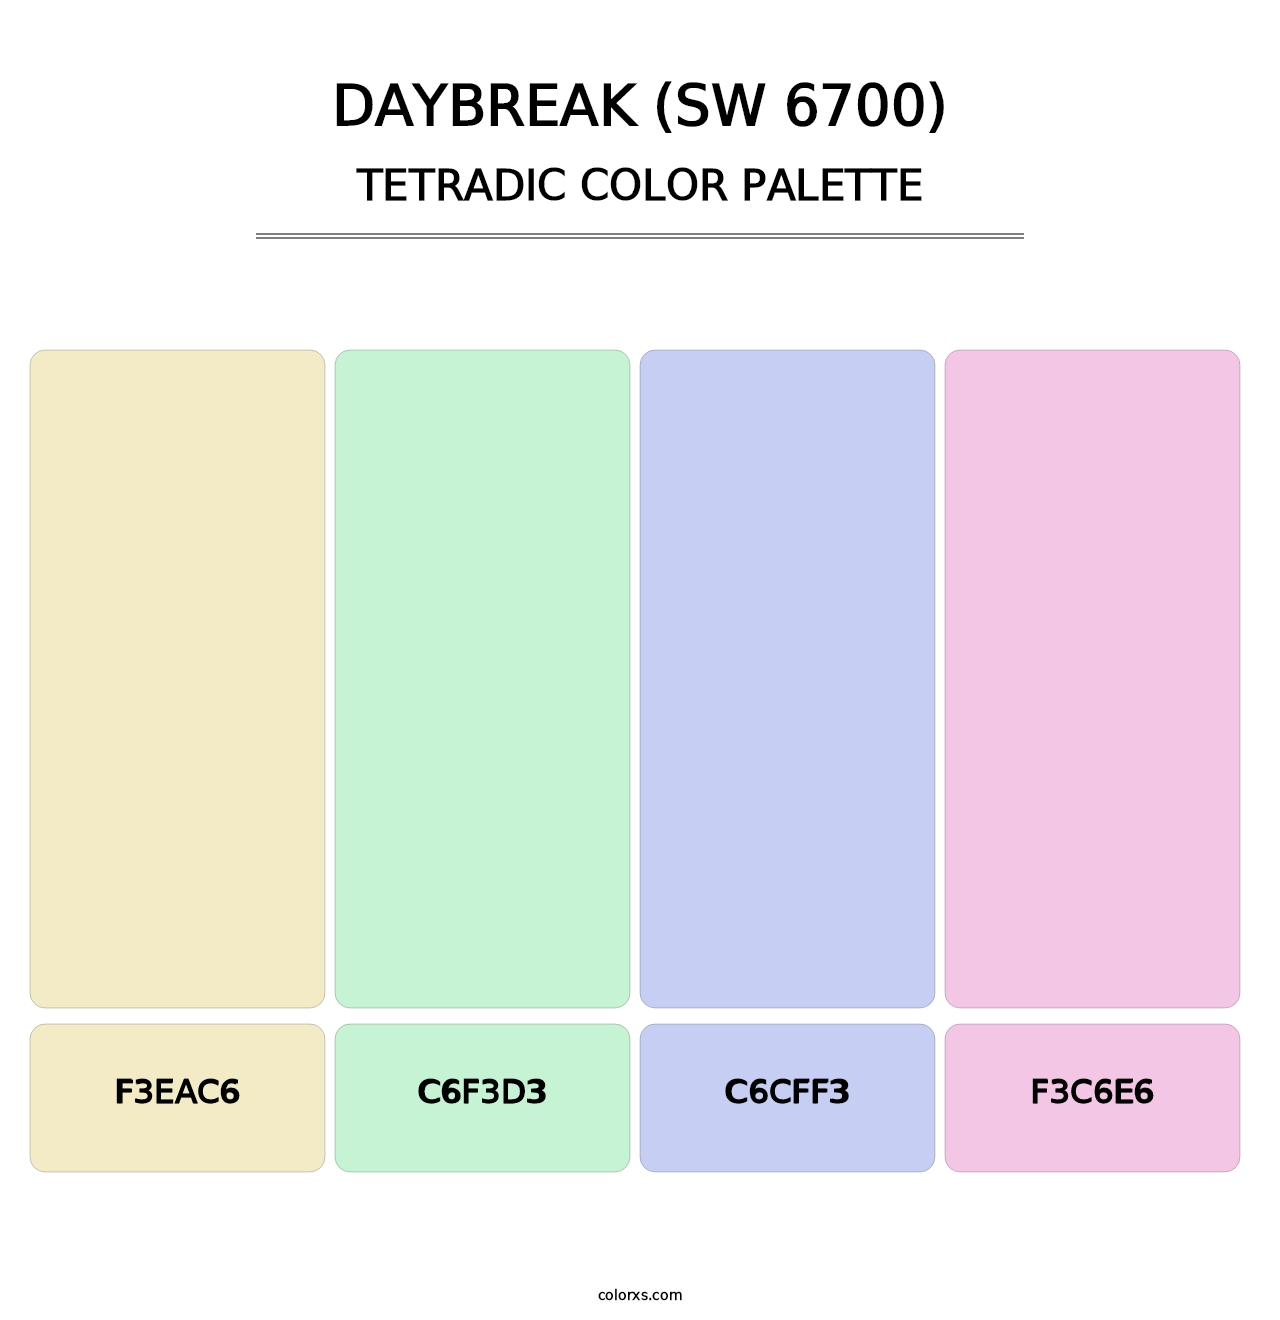 Daybreak (SW 6700) - Tetradic Color Palette